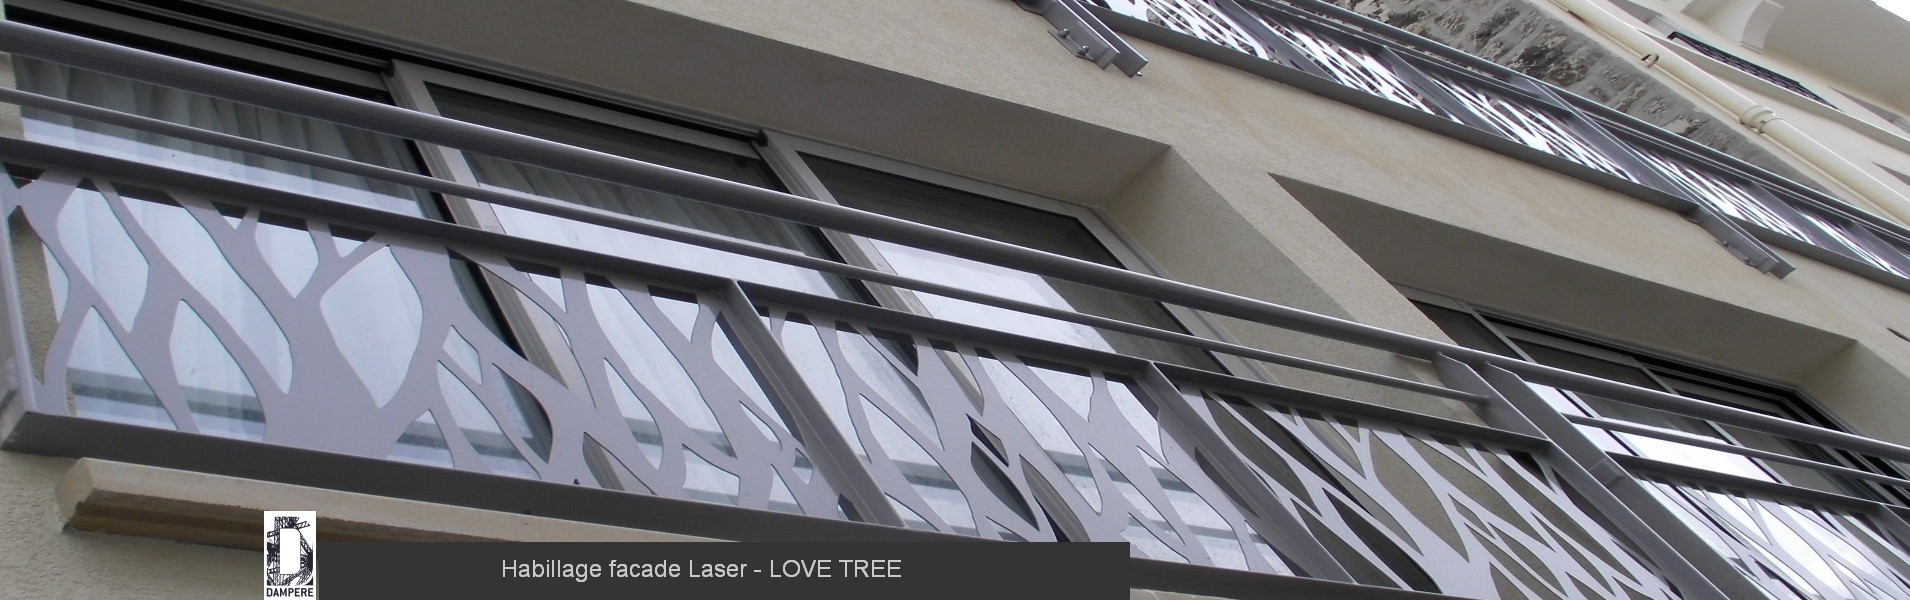 Habillage facade Laser LOVE TREE 5